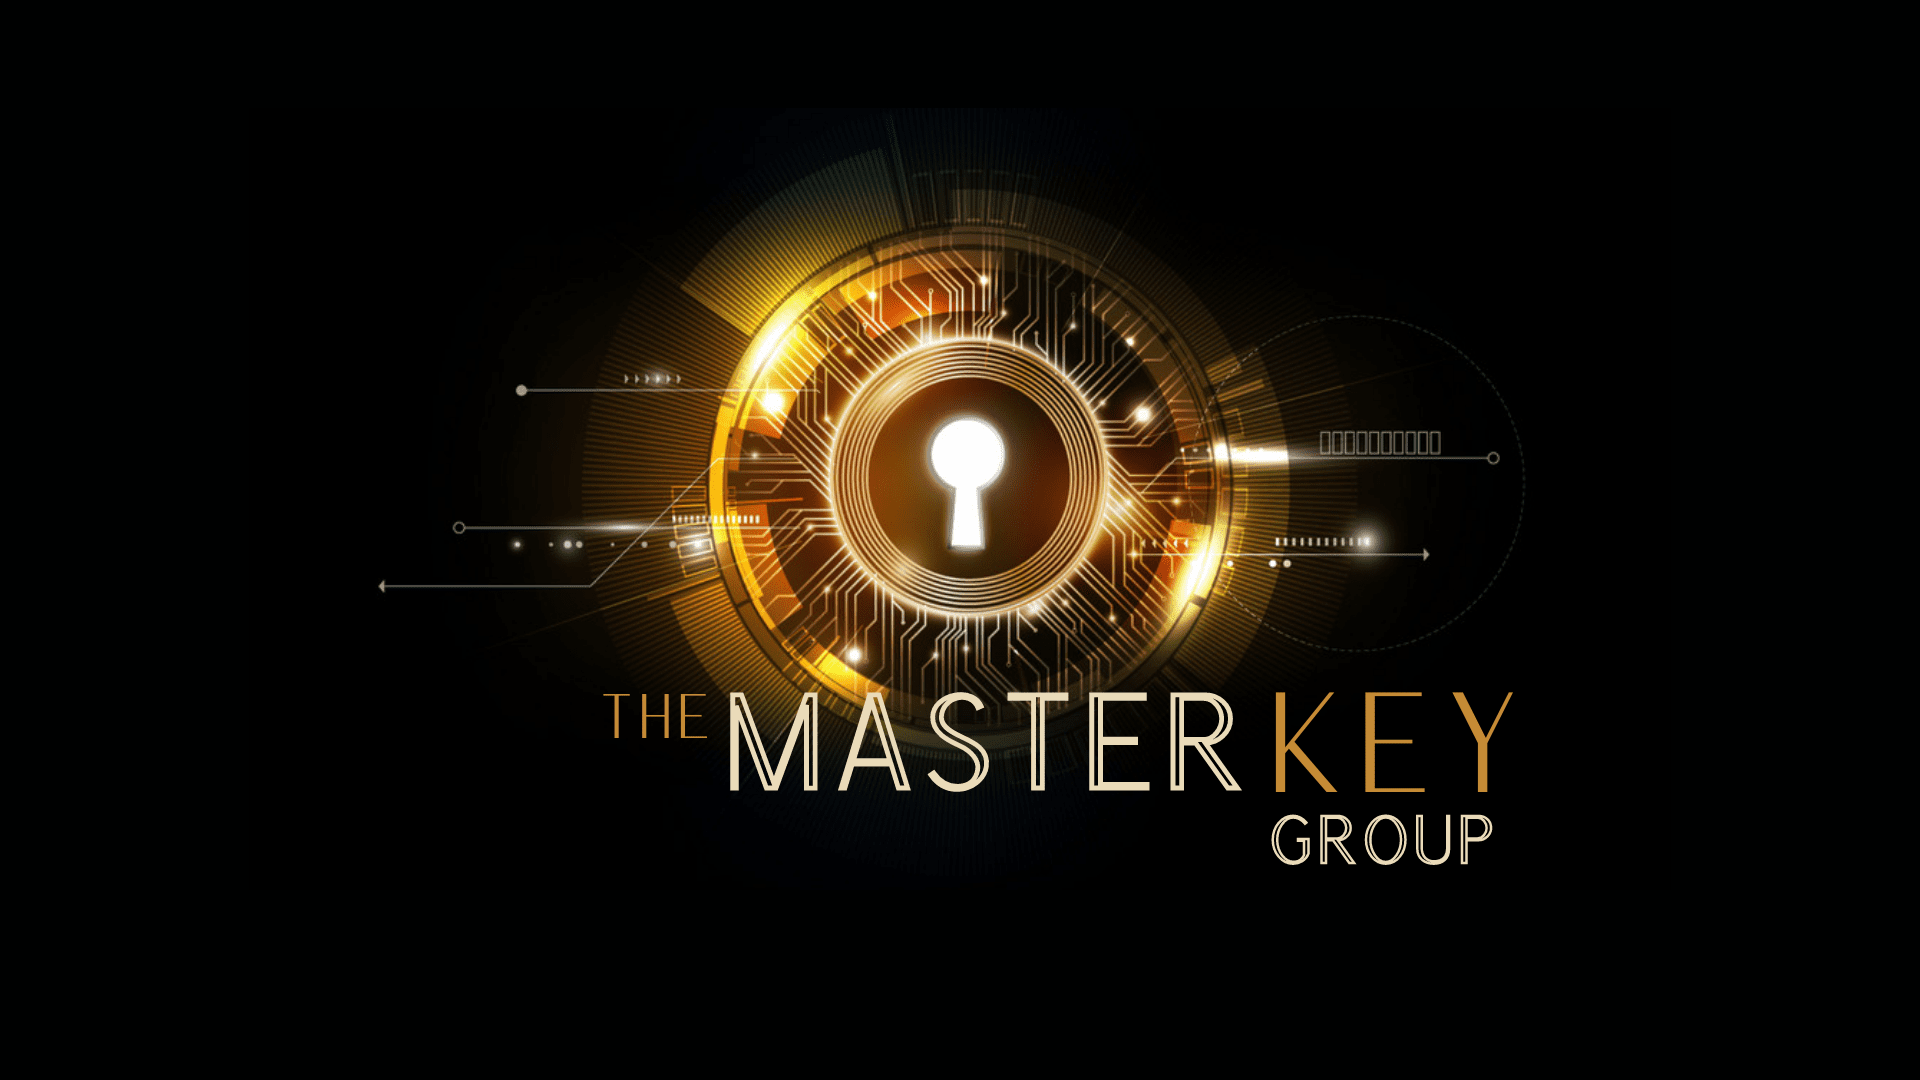 The Master Key Group Ltd